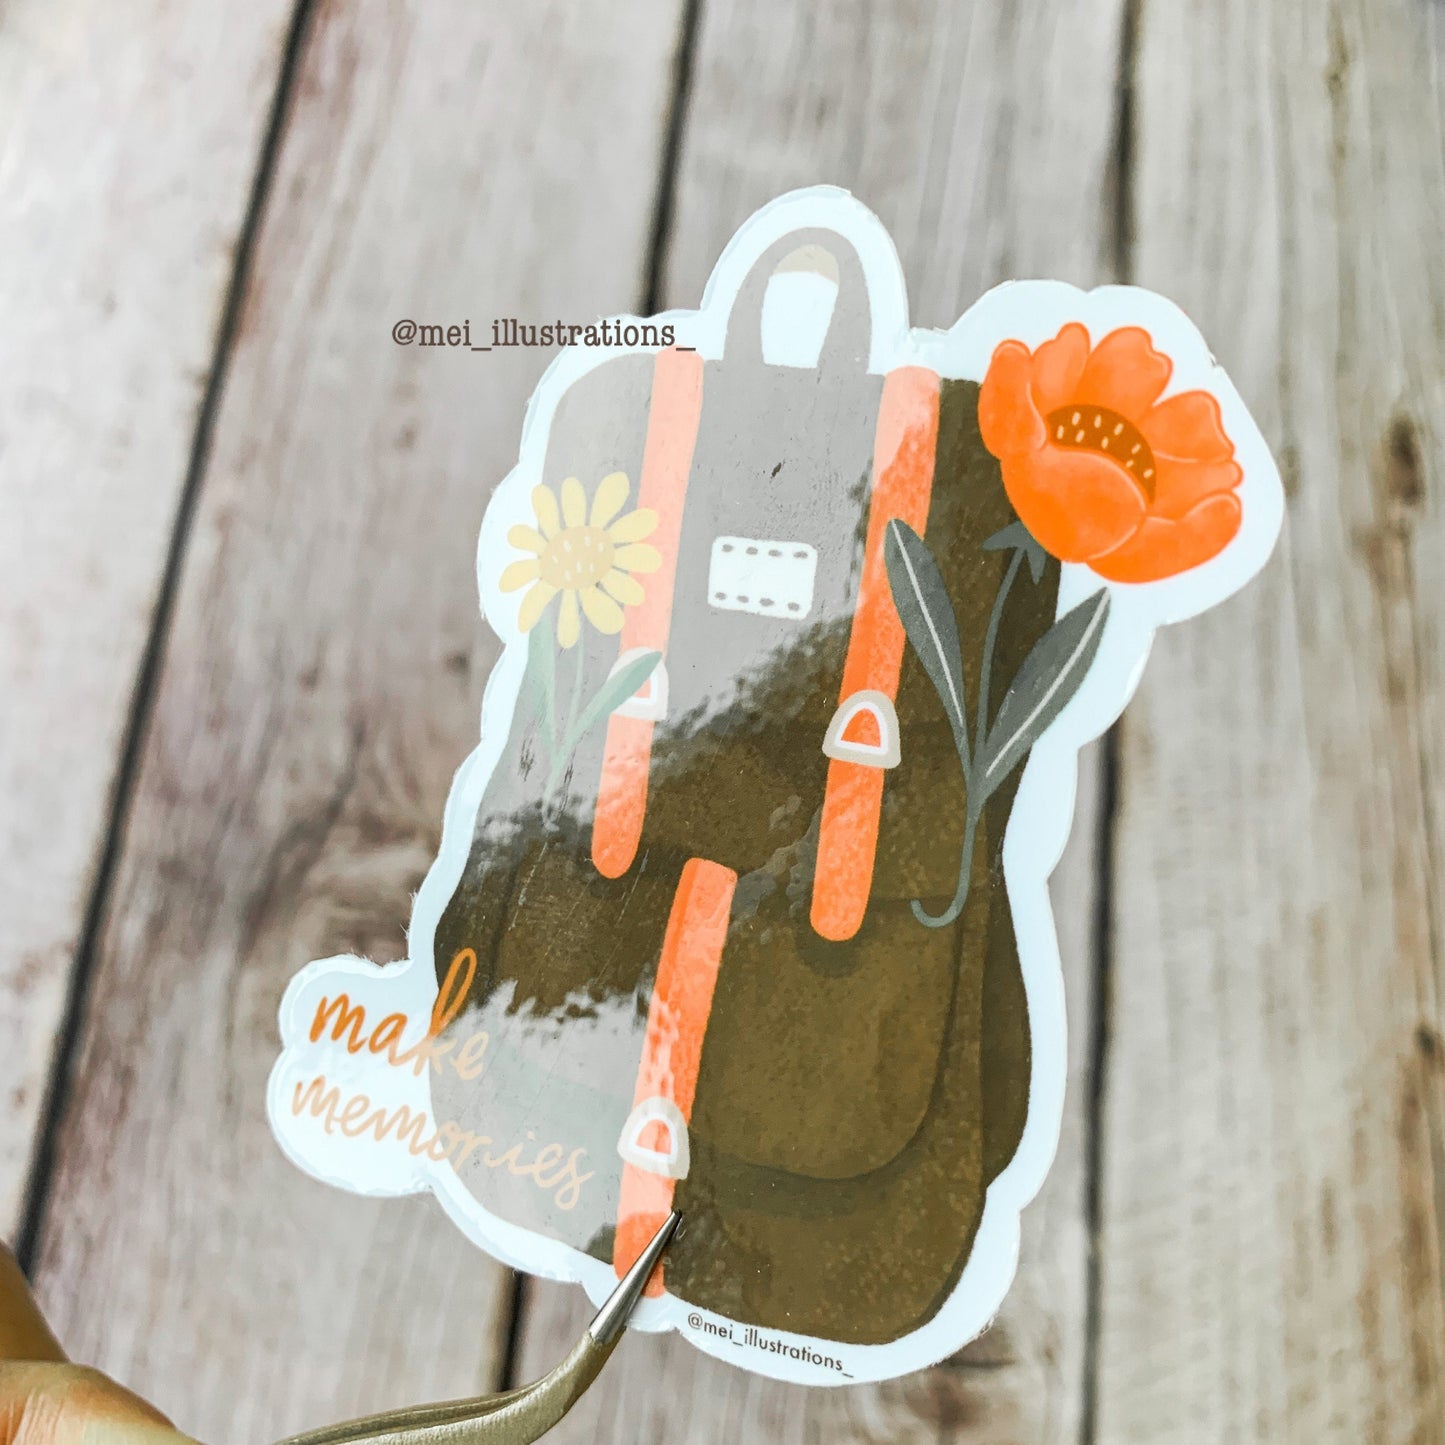 Backpack-Make memories sticker